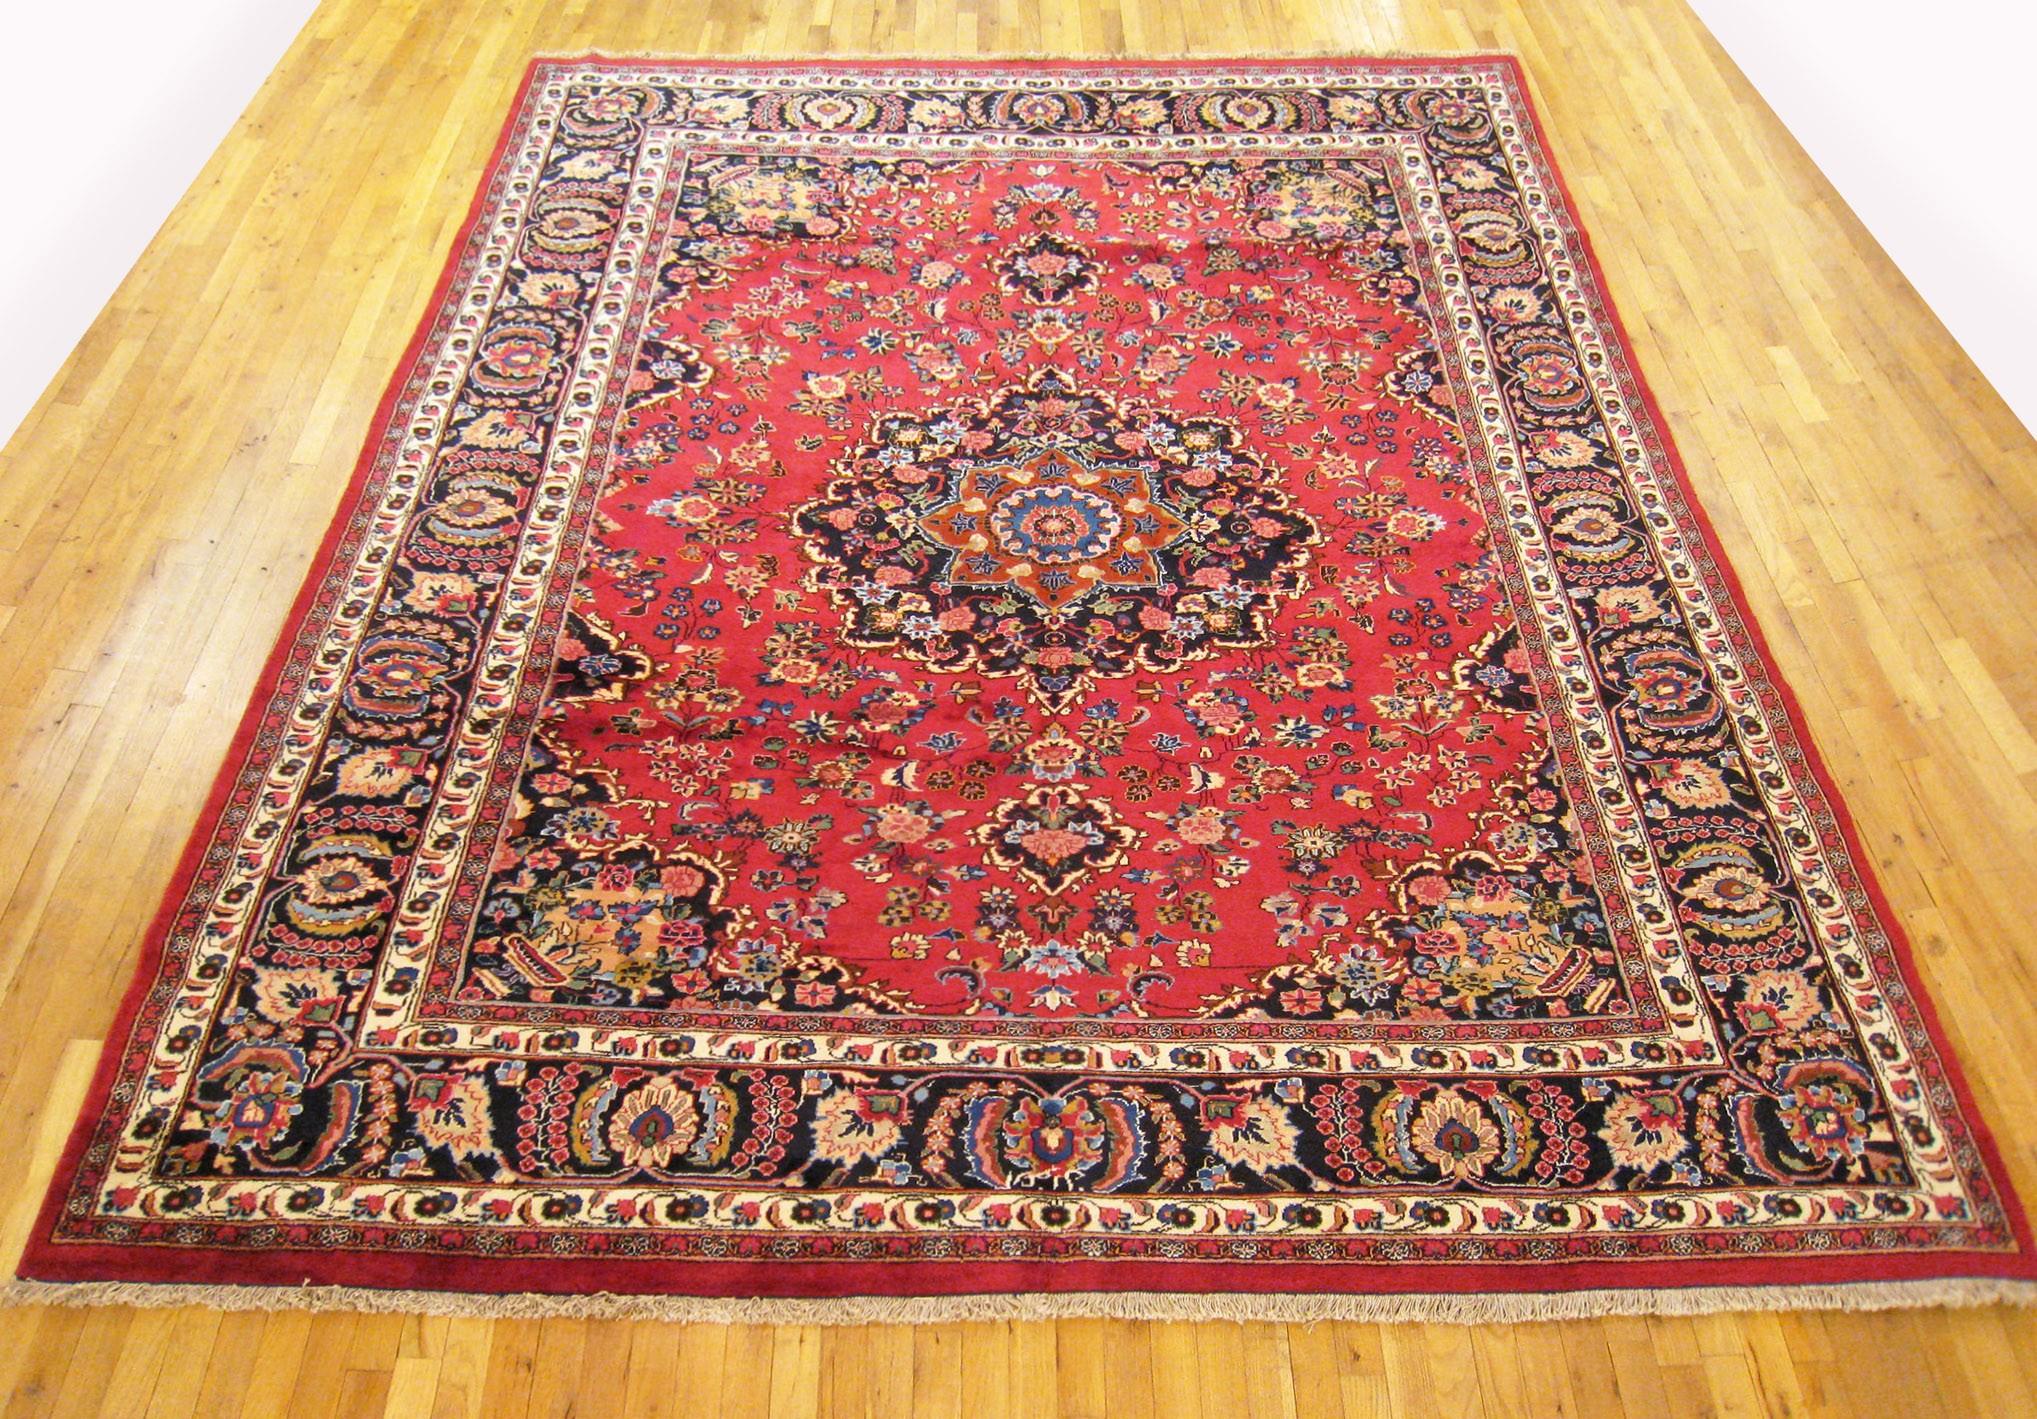 Vintage Persian Meshed Oriental rug, Room size

A vintage Persian Meshed oriental rug, size 11'7